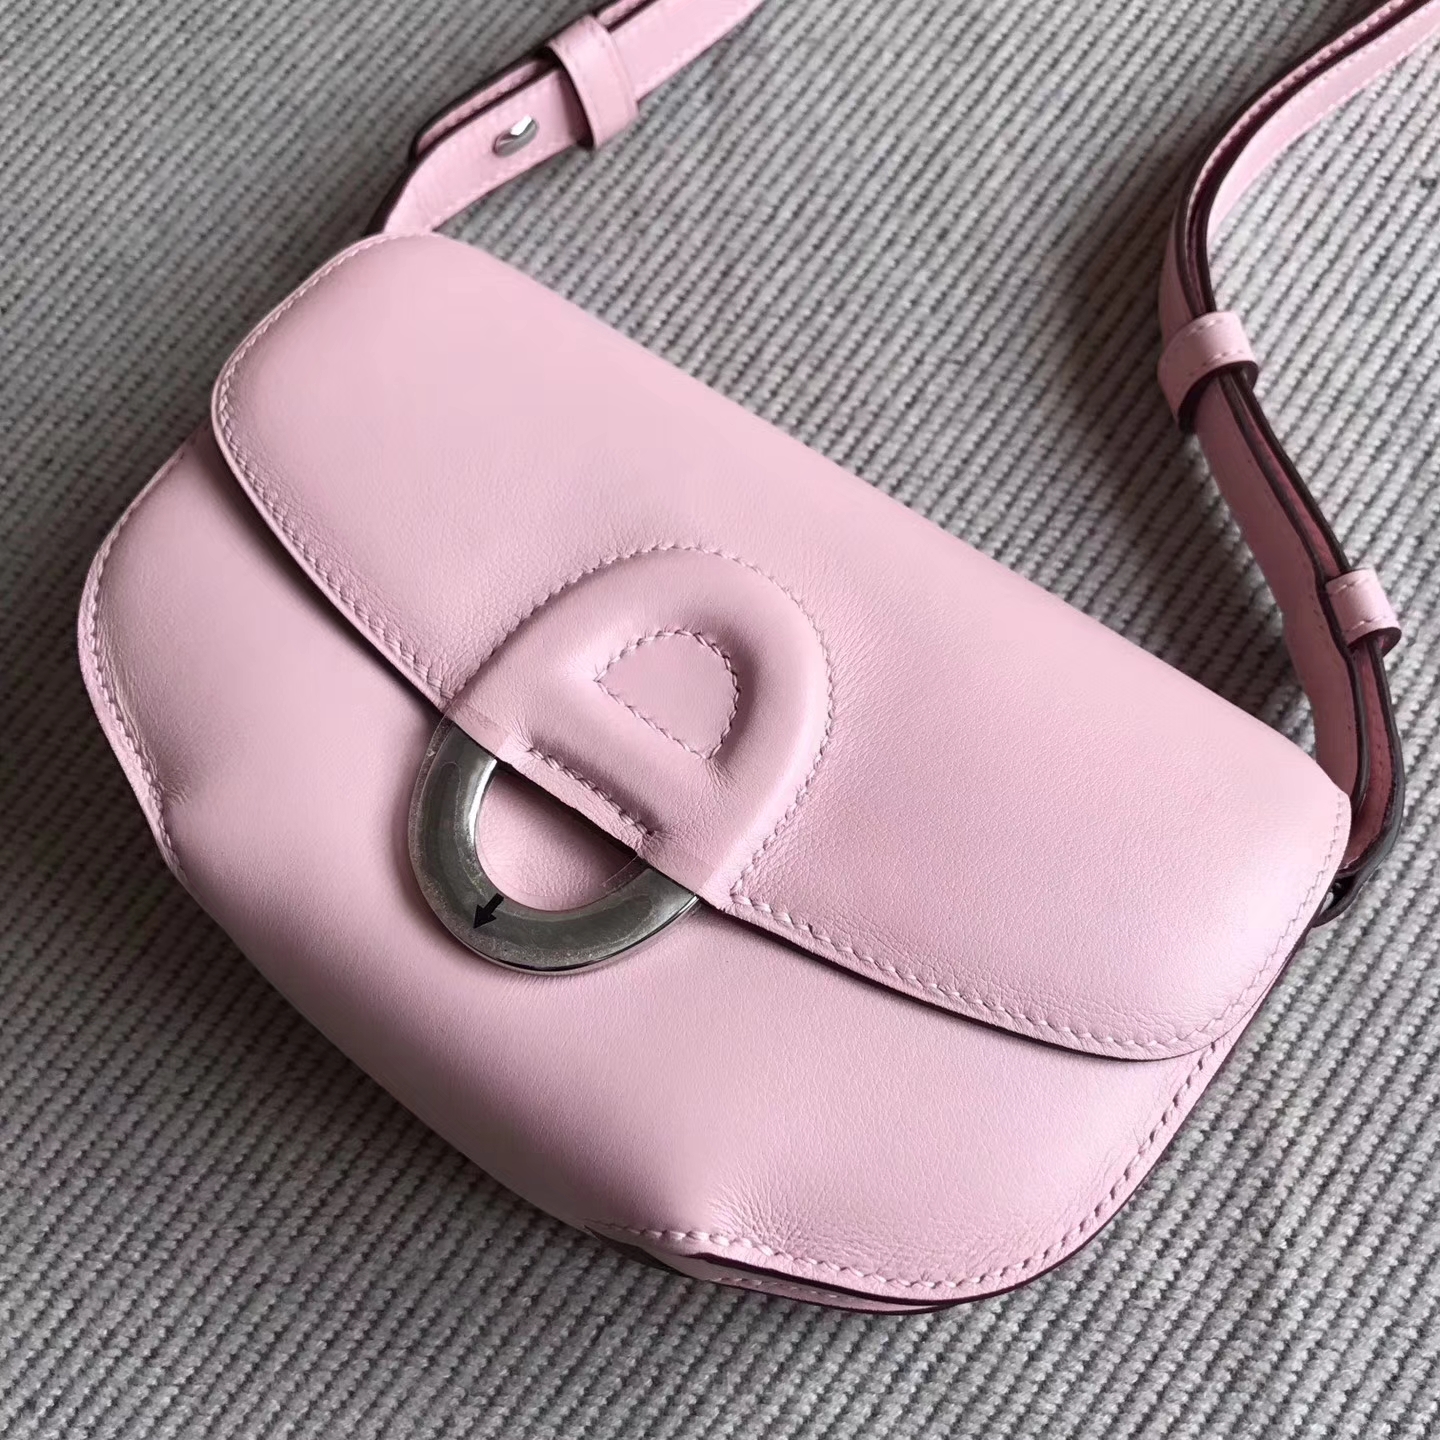 New Arrival Hermes 3Q New Pink Swift Calfskin Cherche Midi Bag20cm